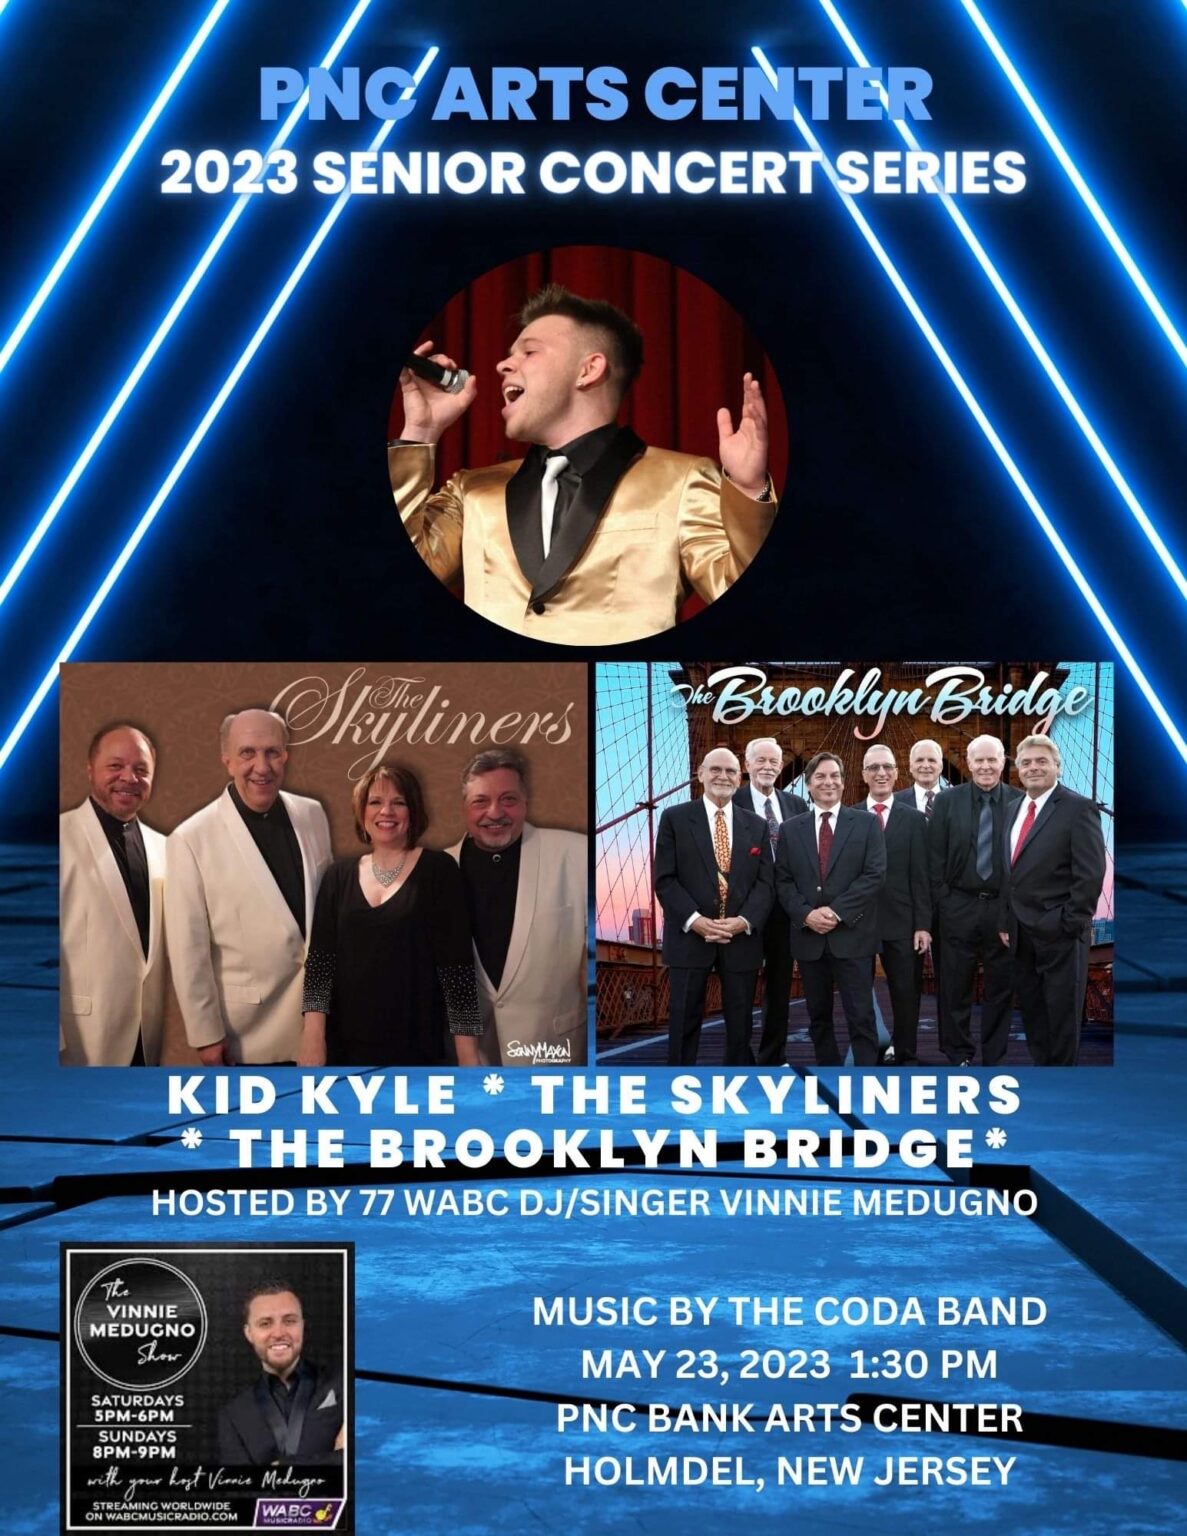 PNC Arts Center 2023 Senior Concert Series has Skyliners, Brooklyn